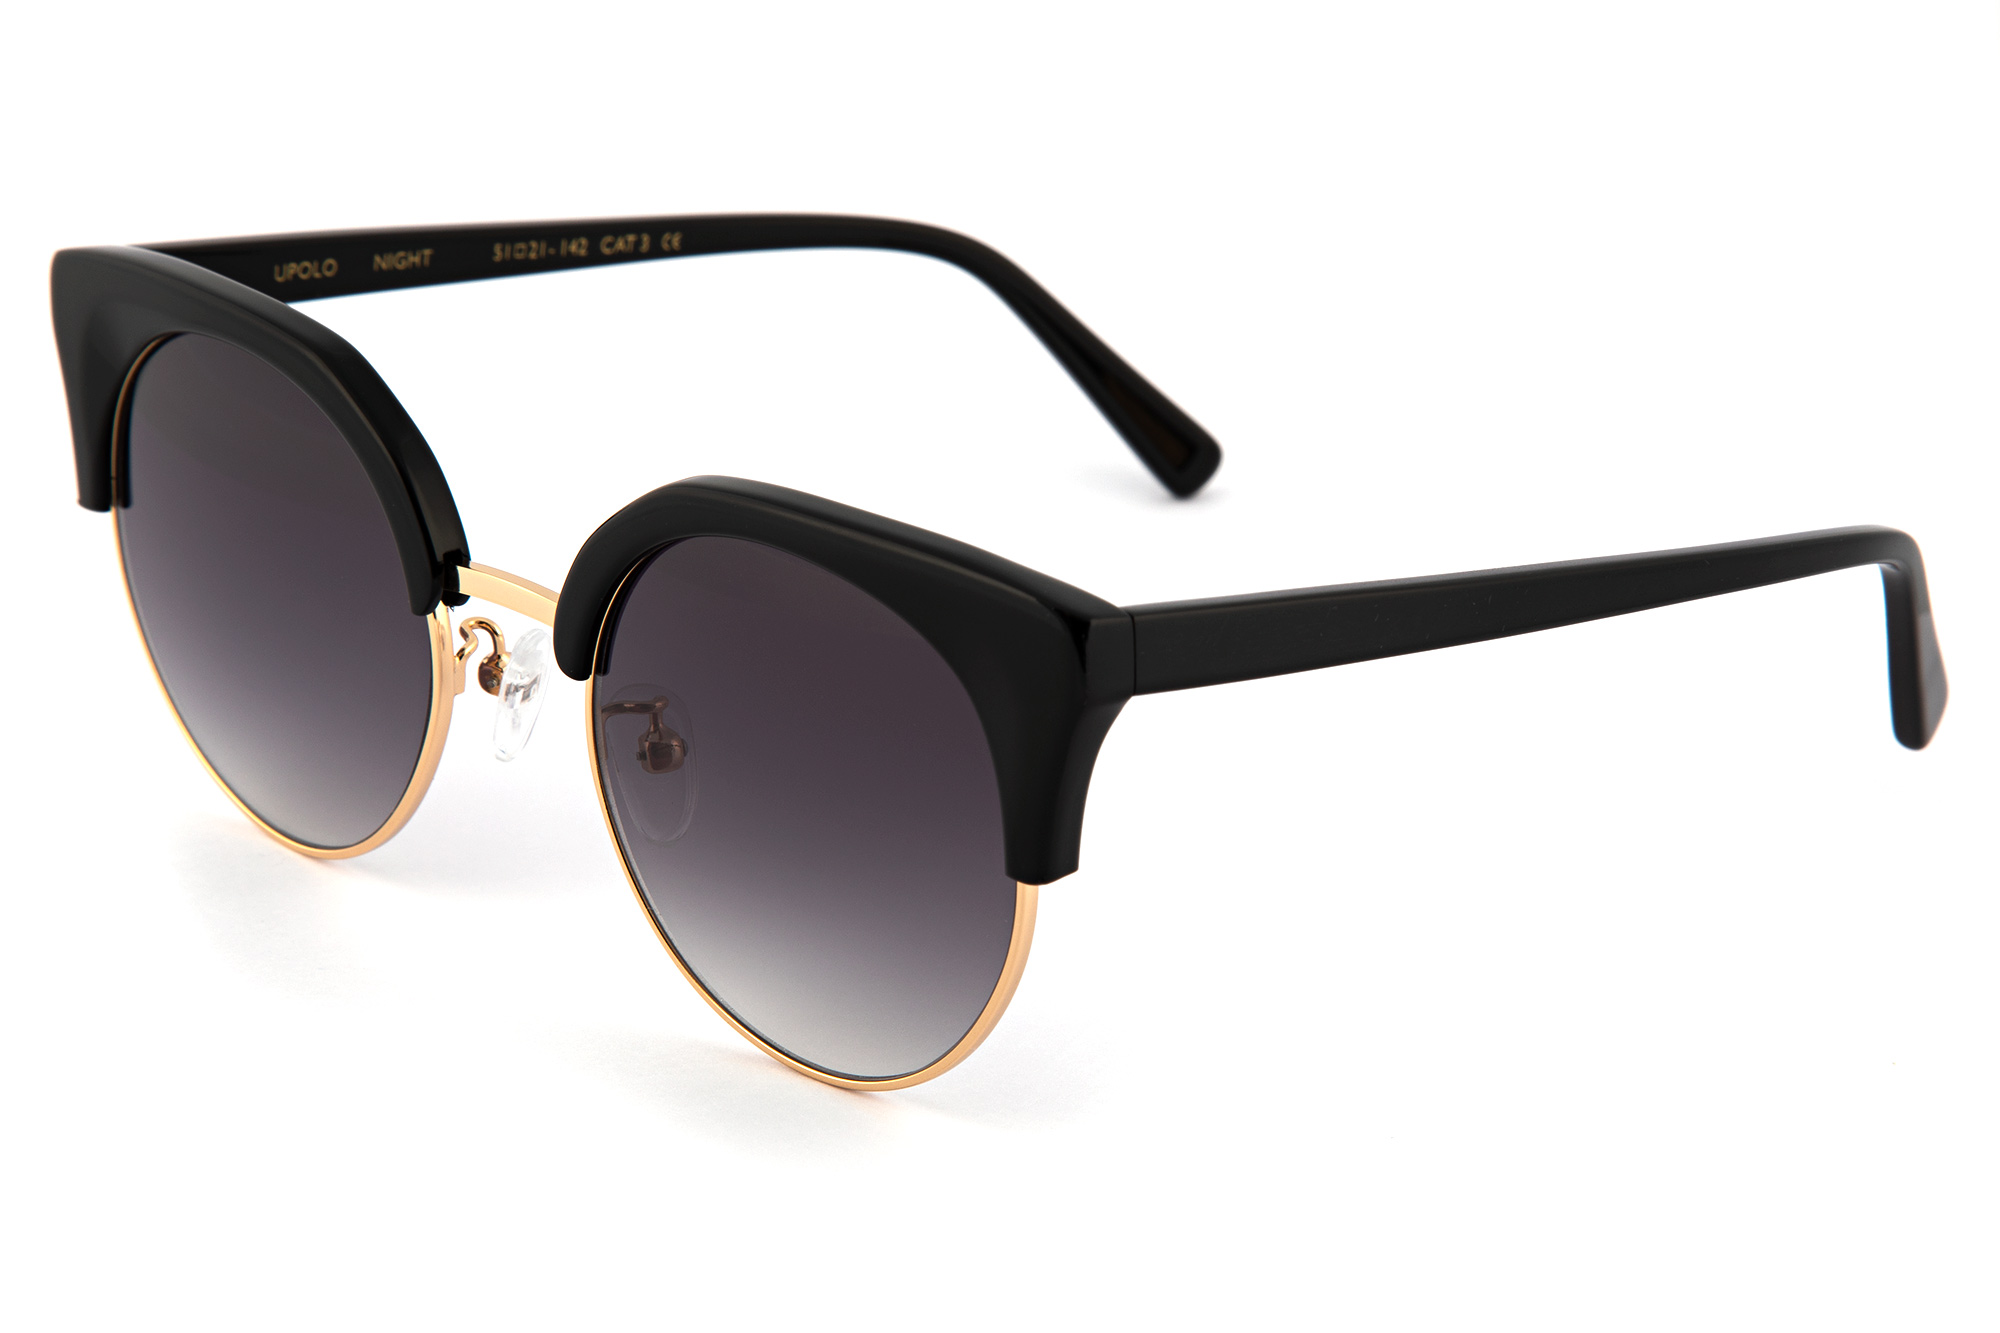 Sunglasses Bluesky Upolo Night Women 2020